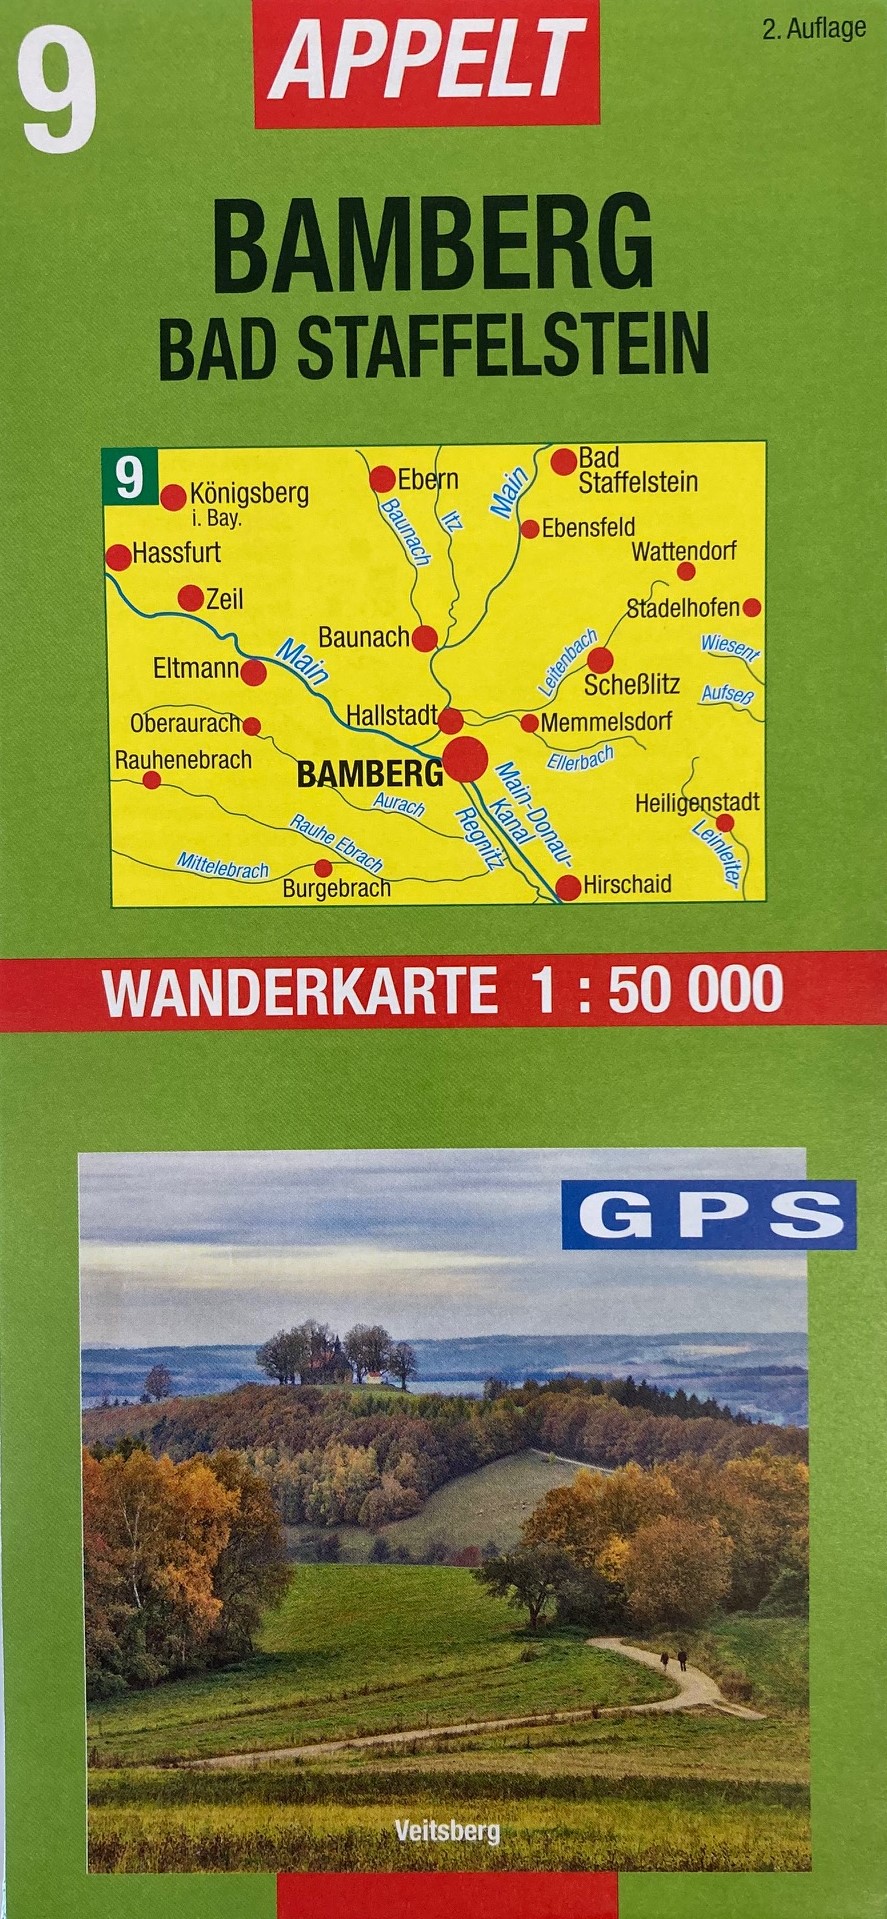 Appelt Wanderkarte Bamberg Bad Staffelstein